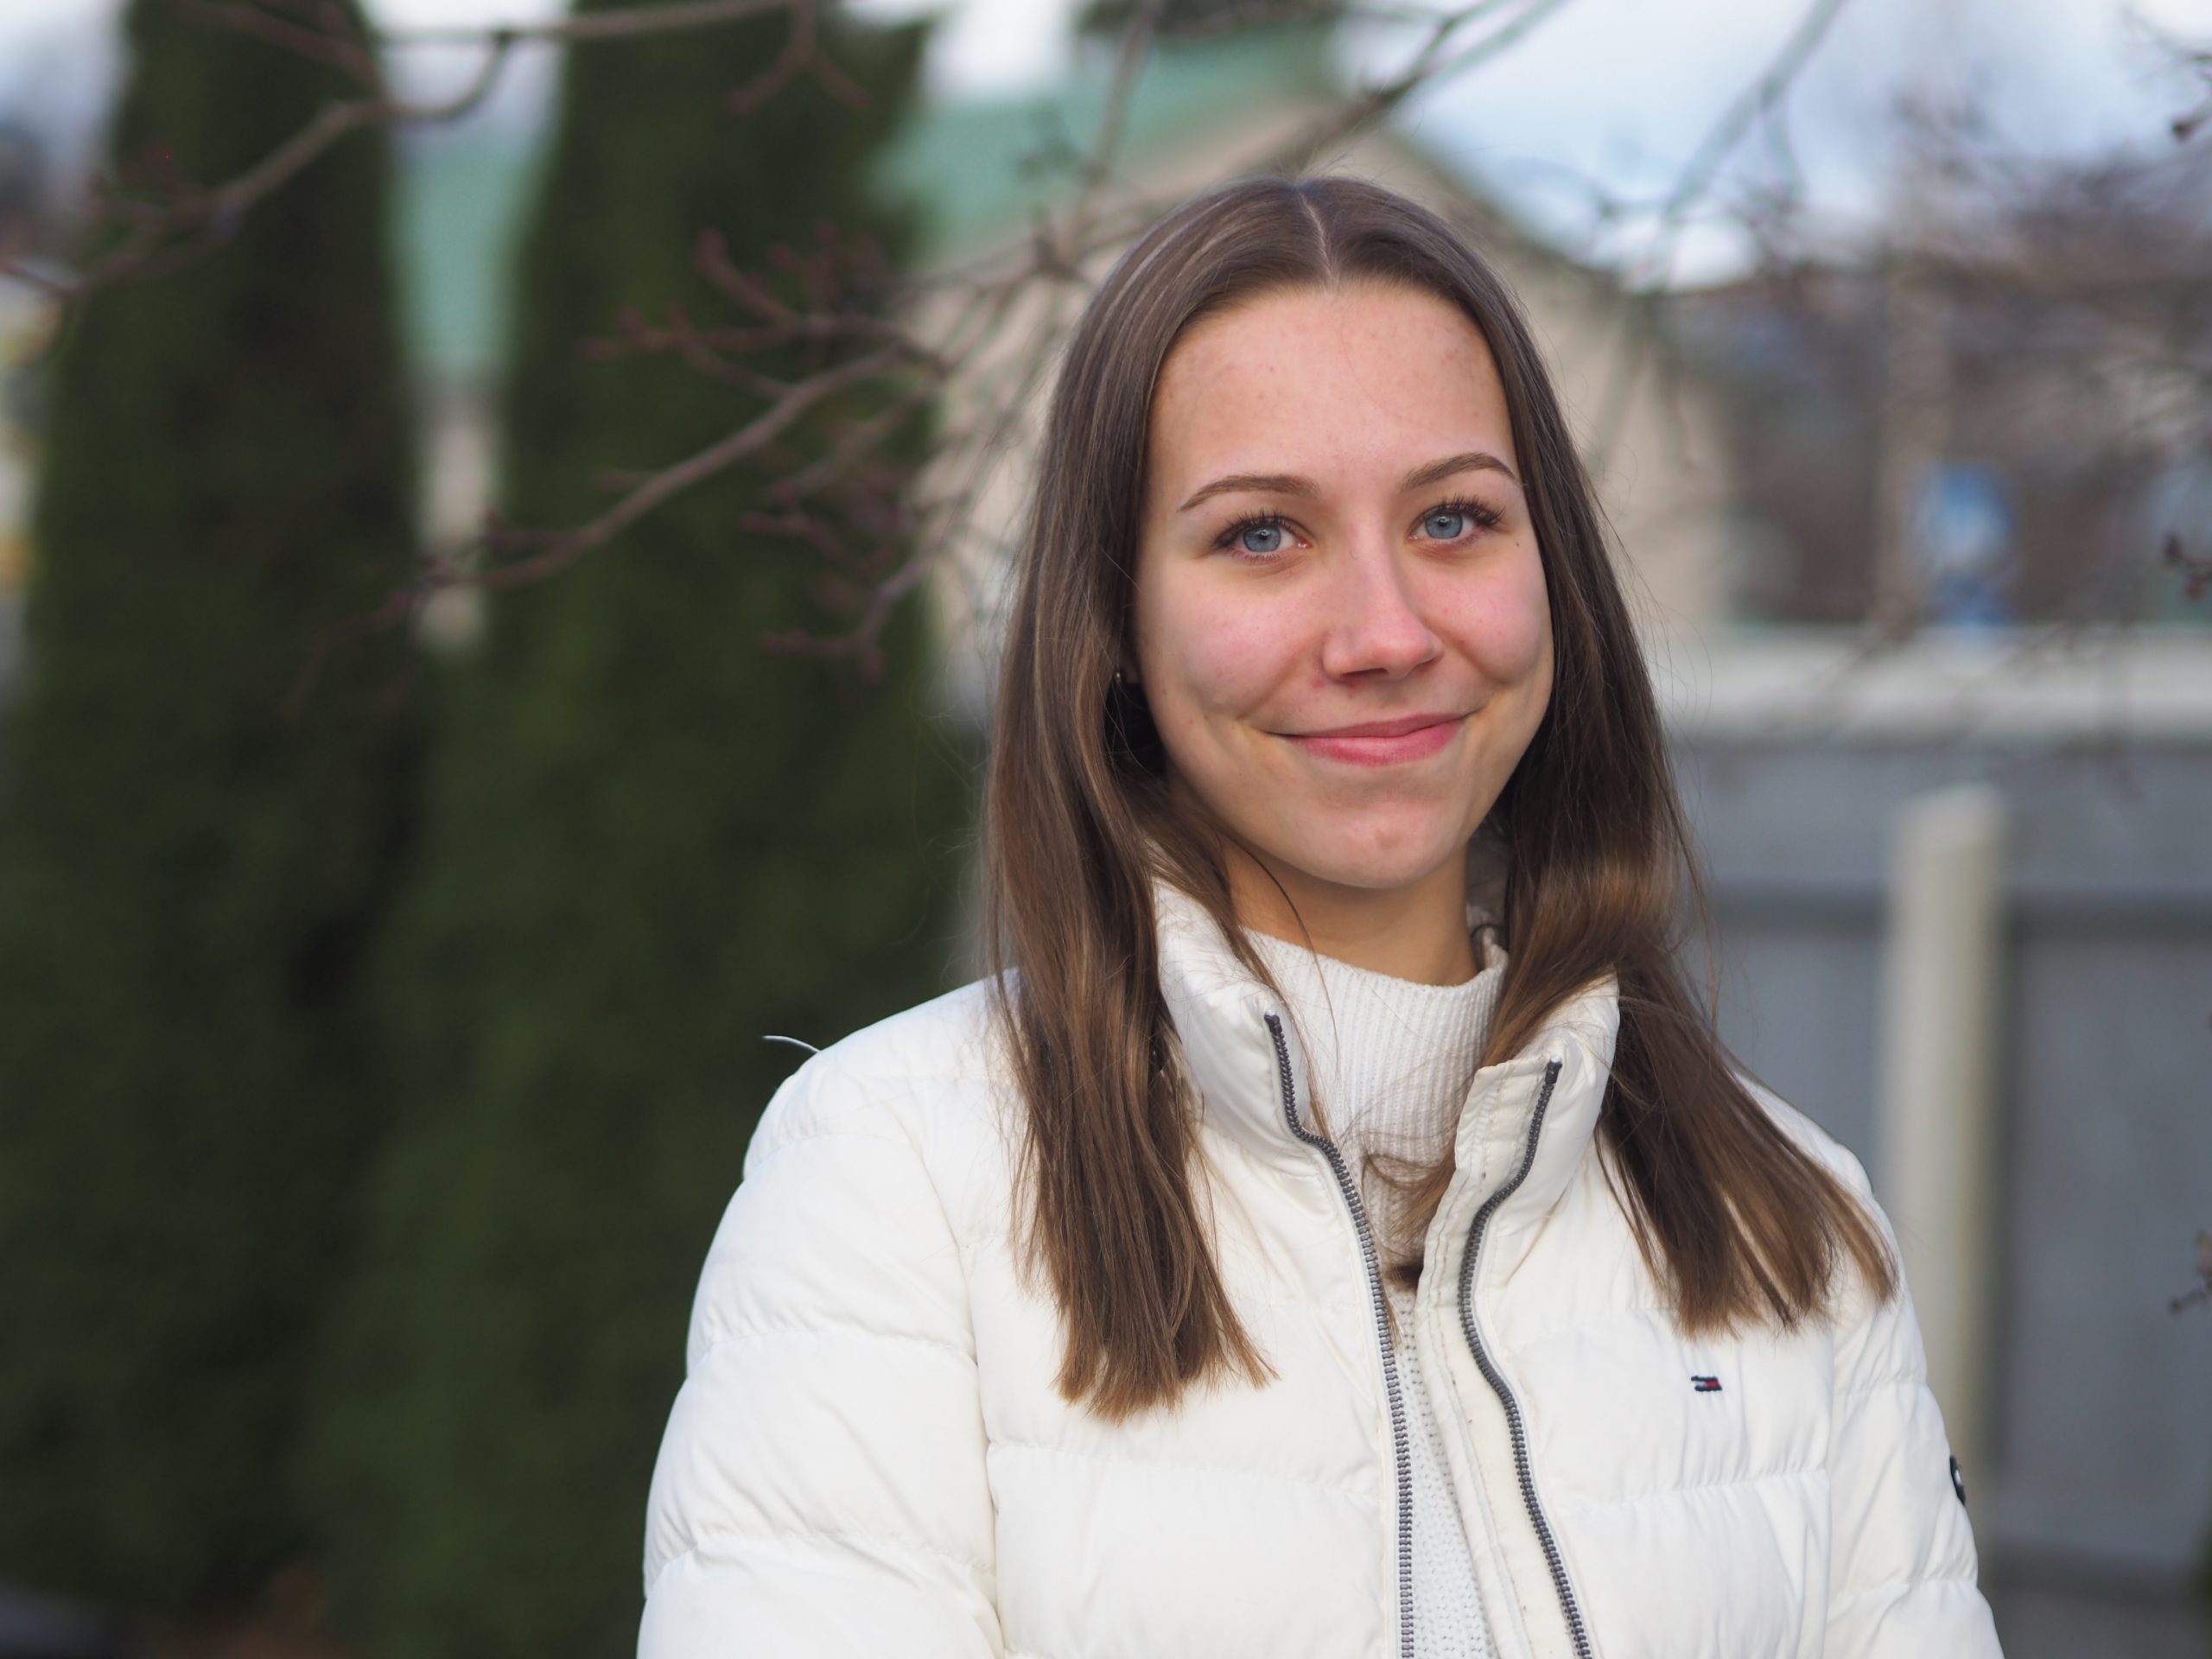 Maria Arvonen, 18 Student in her final year at Uusikaupunki general upper secondary school